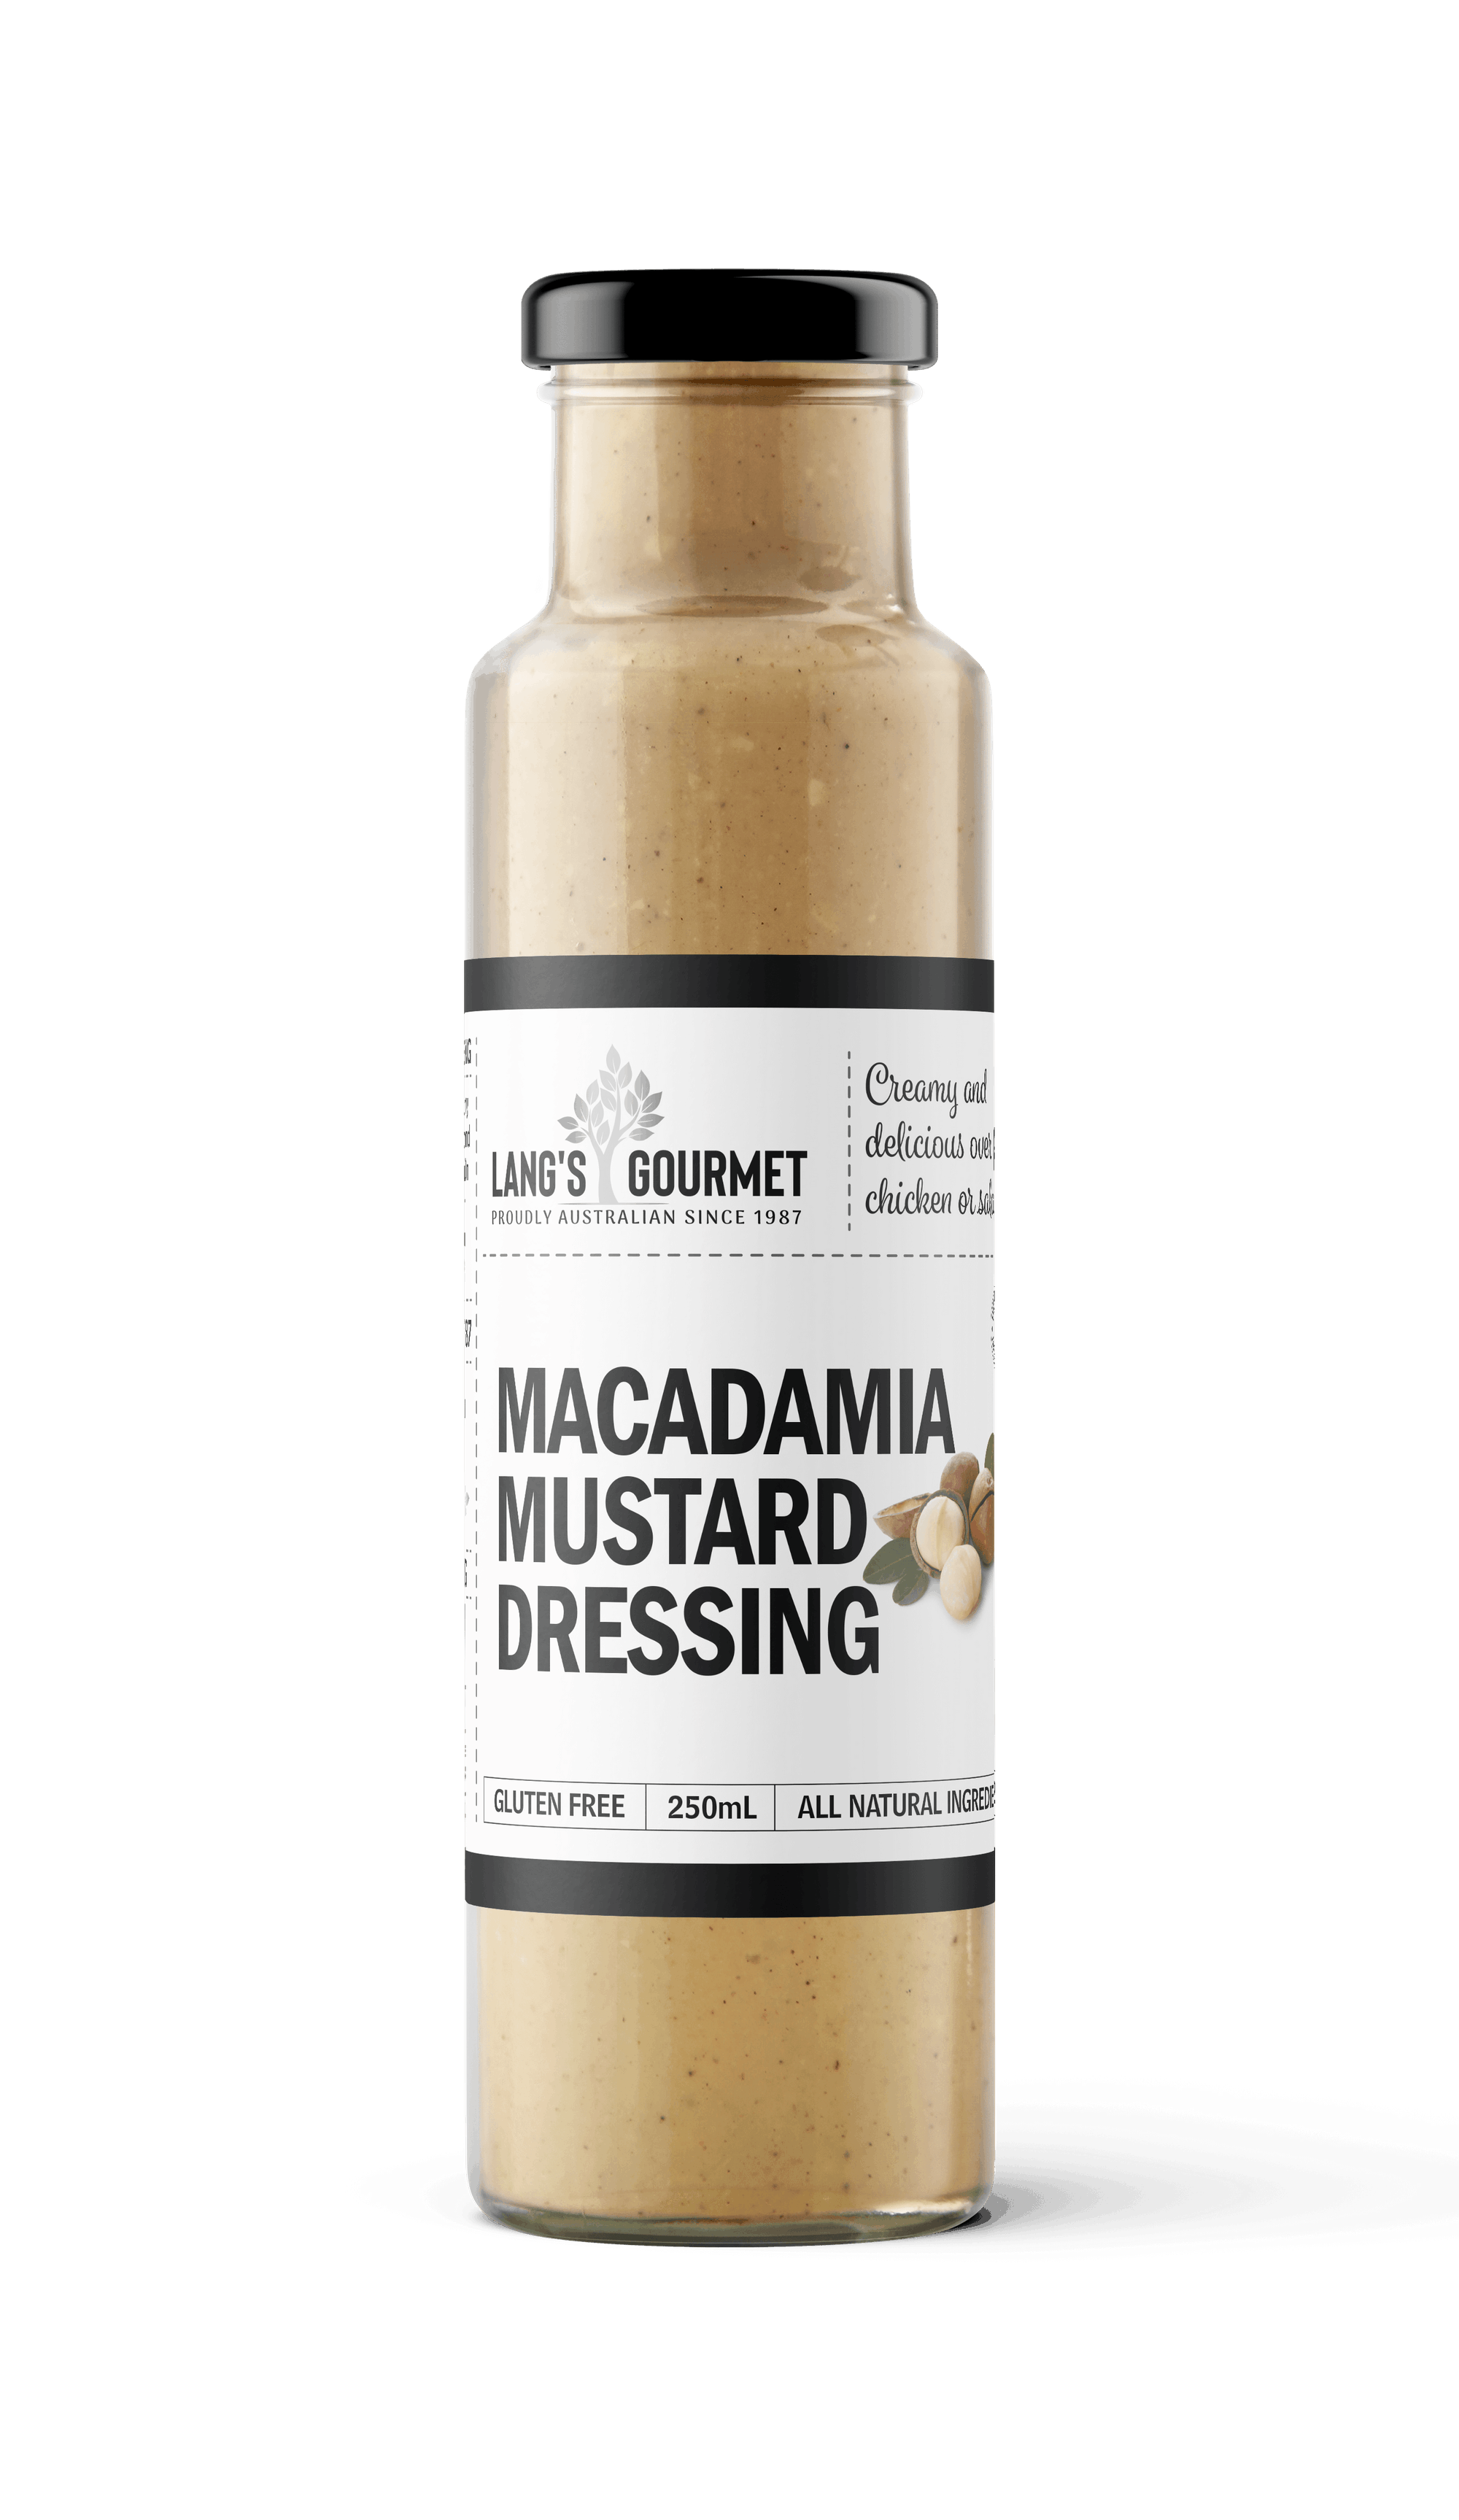 Lang's Gourmet Macadamia Mustard Dressing